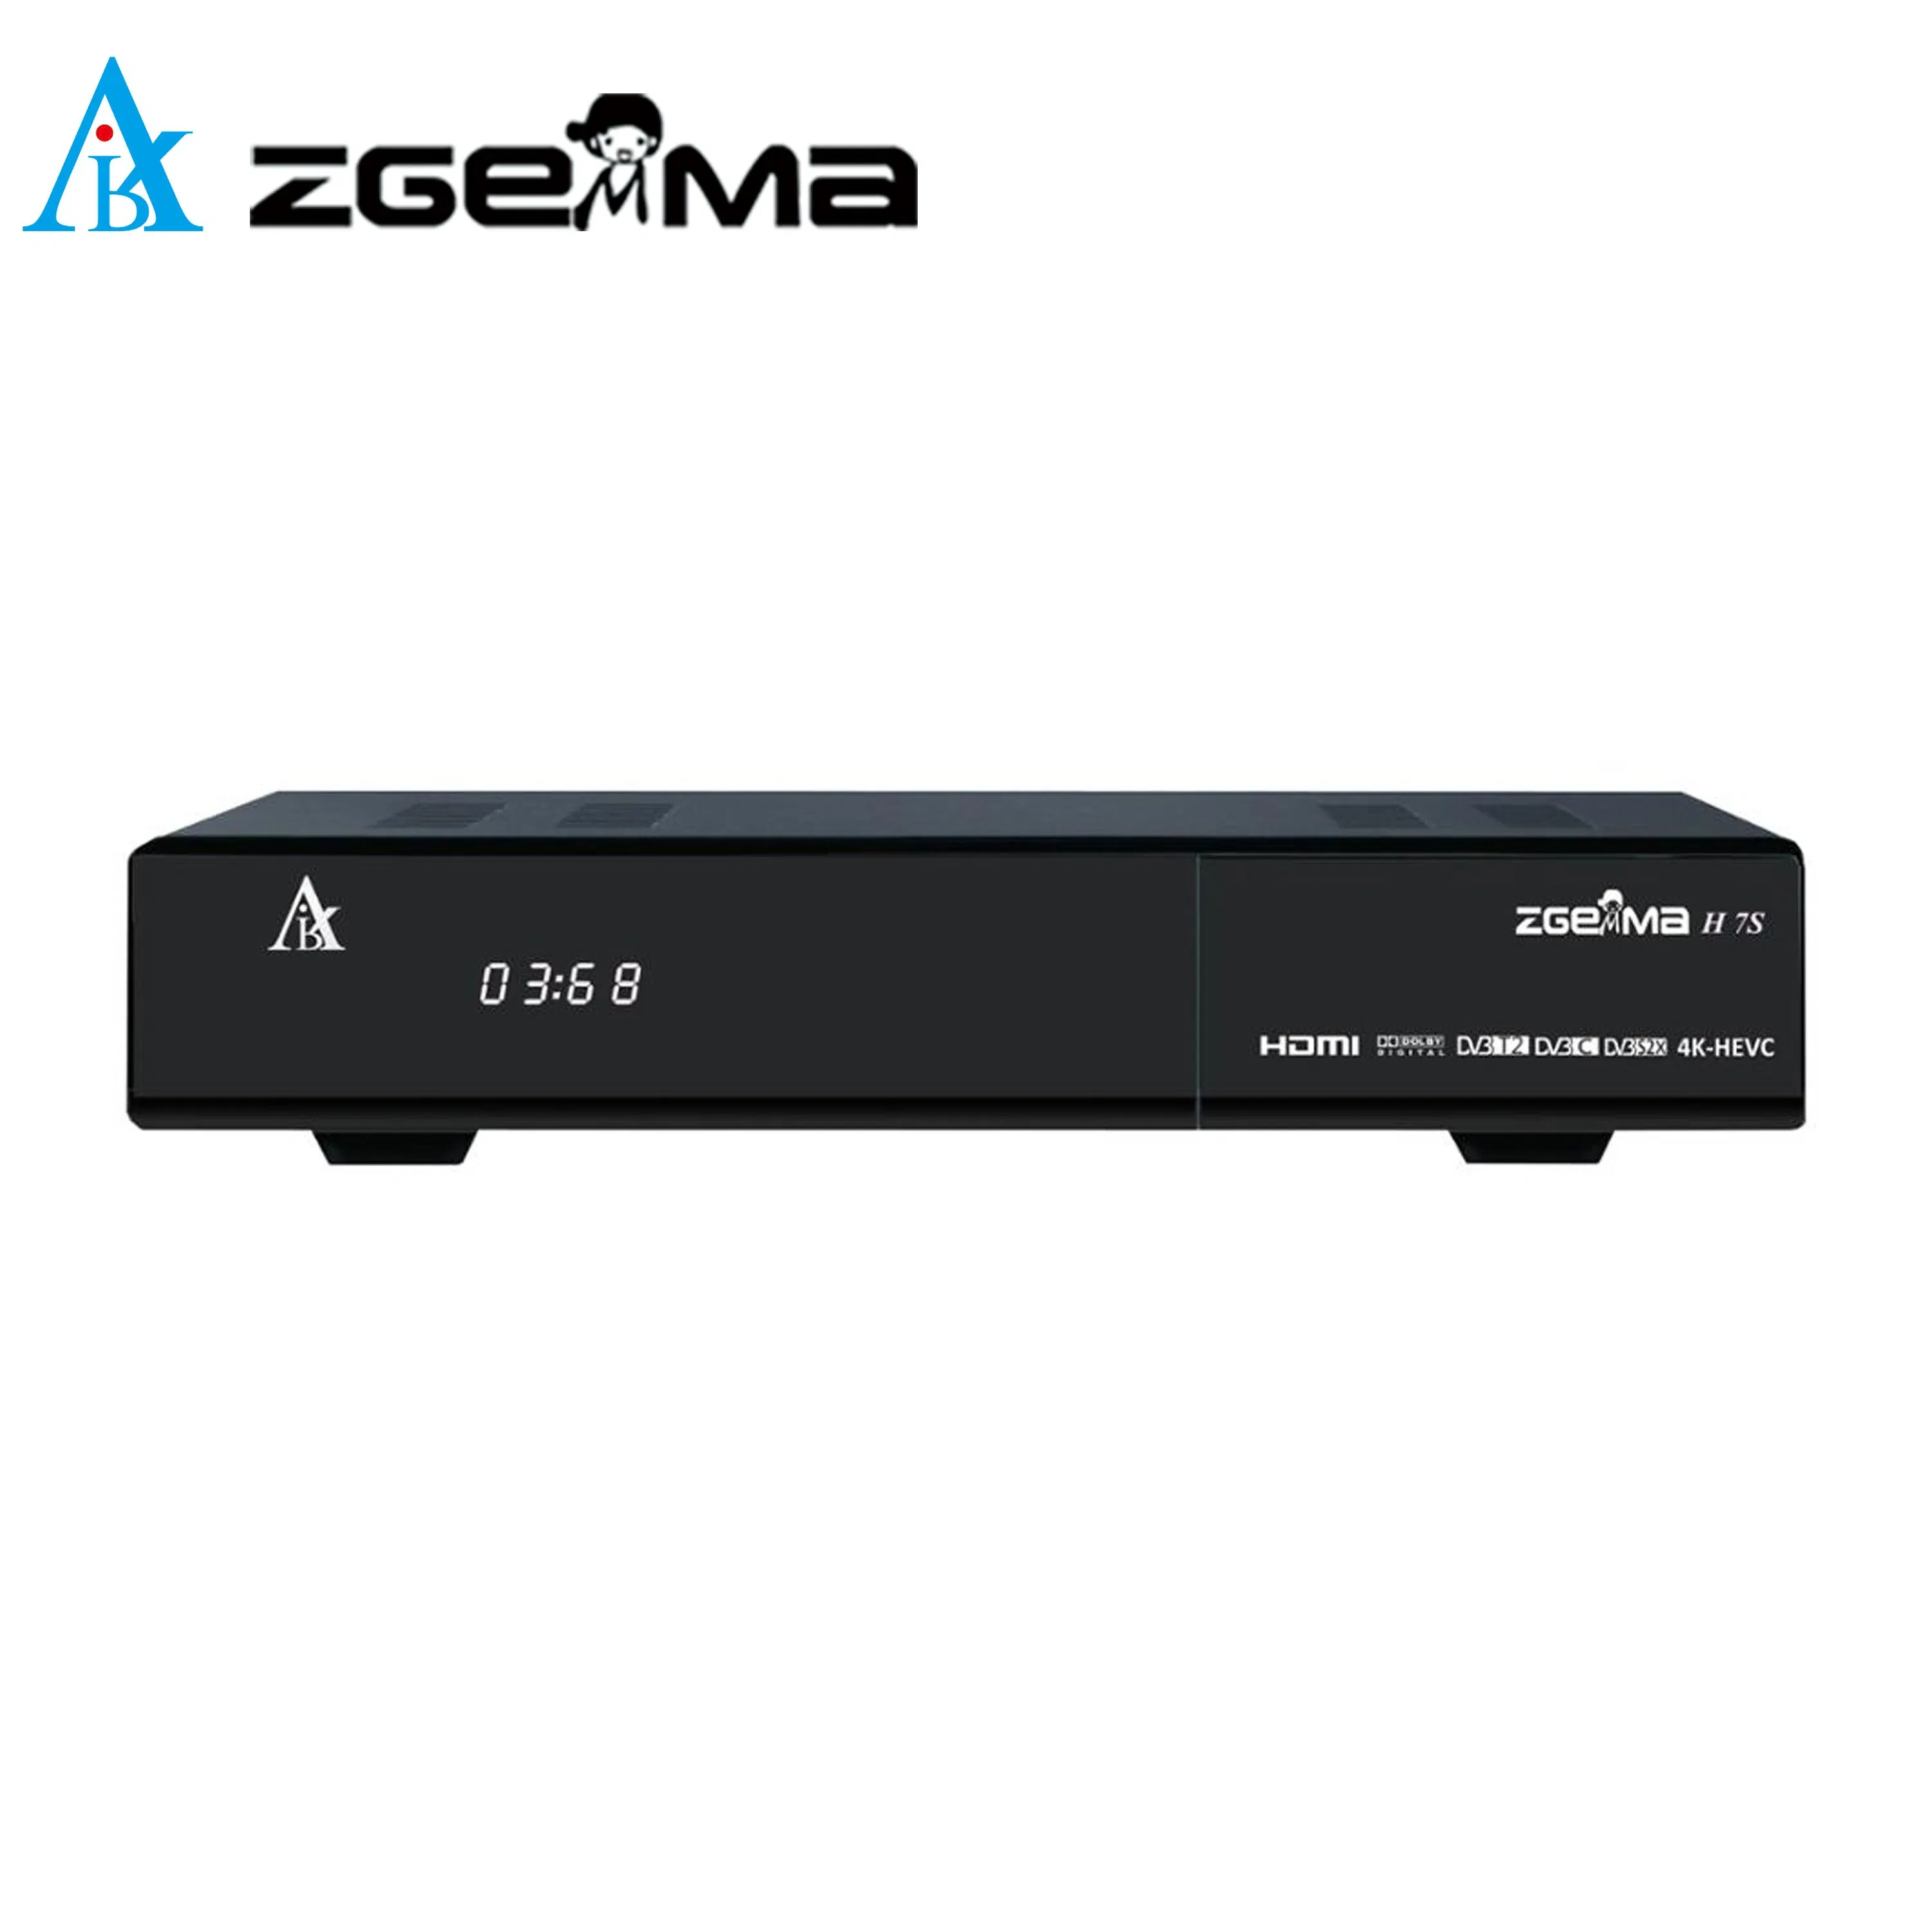 Zgemma H7s Satellite TV Receiver - Enigma2 Linux OS, 2*DVB-S2/S2X + DVB-T2/C Hybrid Tuner, UHD 4K Resolution TV Decoder